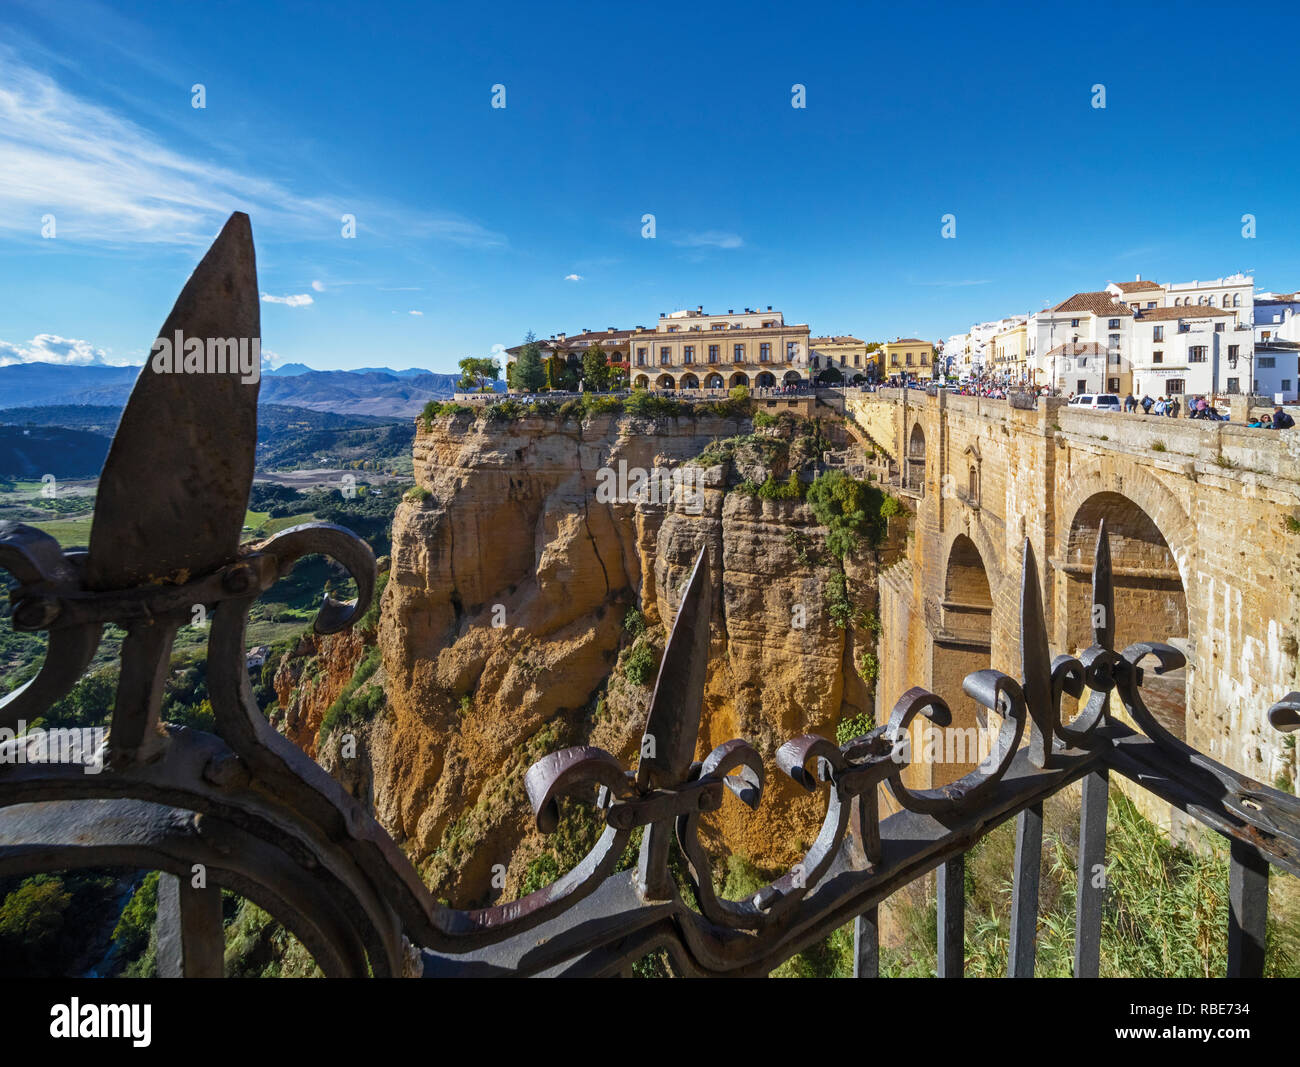 Ronda, Provinz Malaga, Andalusien, Spanien. Die neue Brücke - Puente Nuevo - auf der linken Seite und den Nationalen Parador - Parador Nacional - Zentrum. Stockfoto